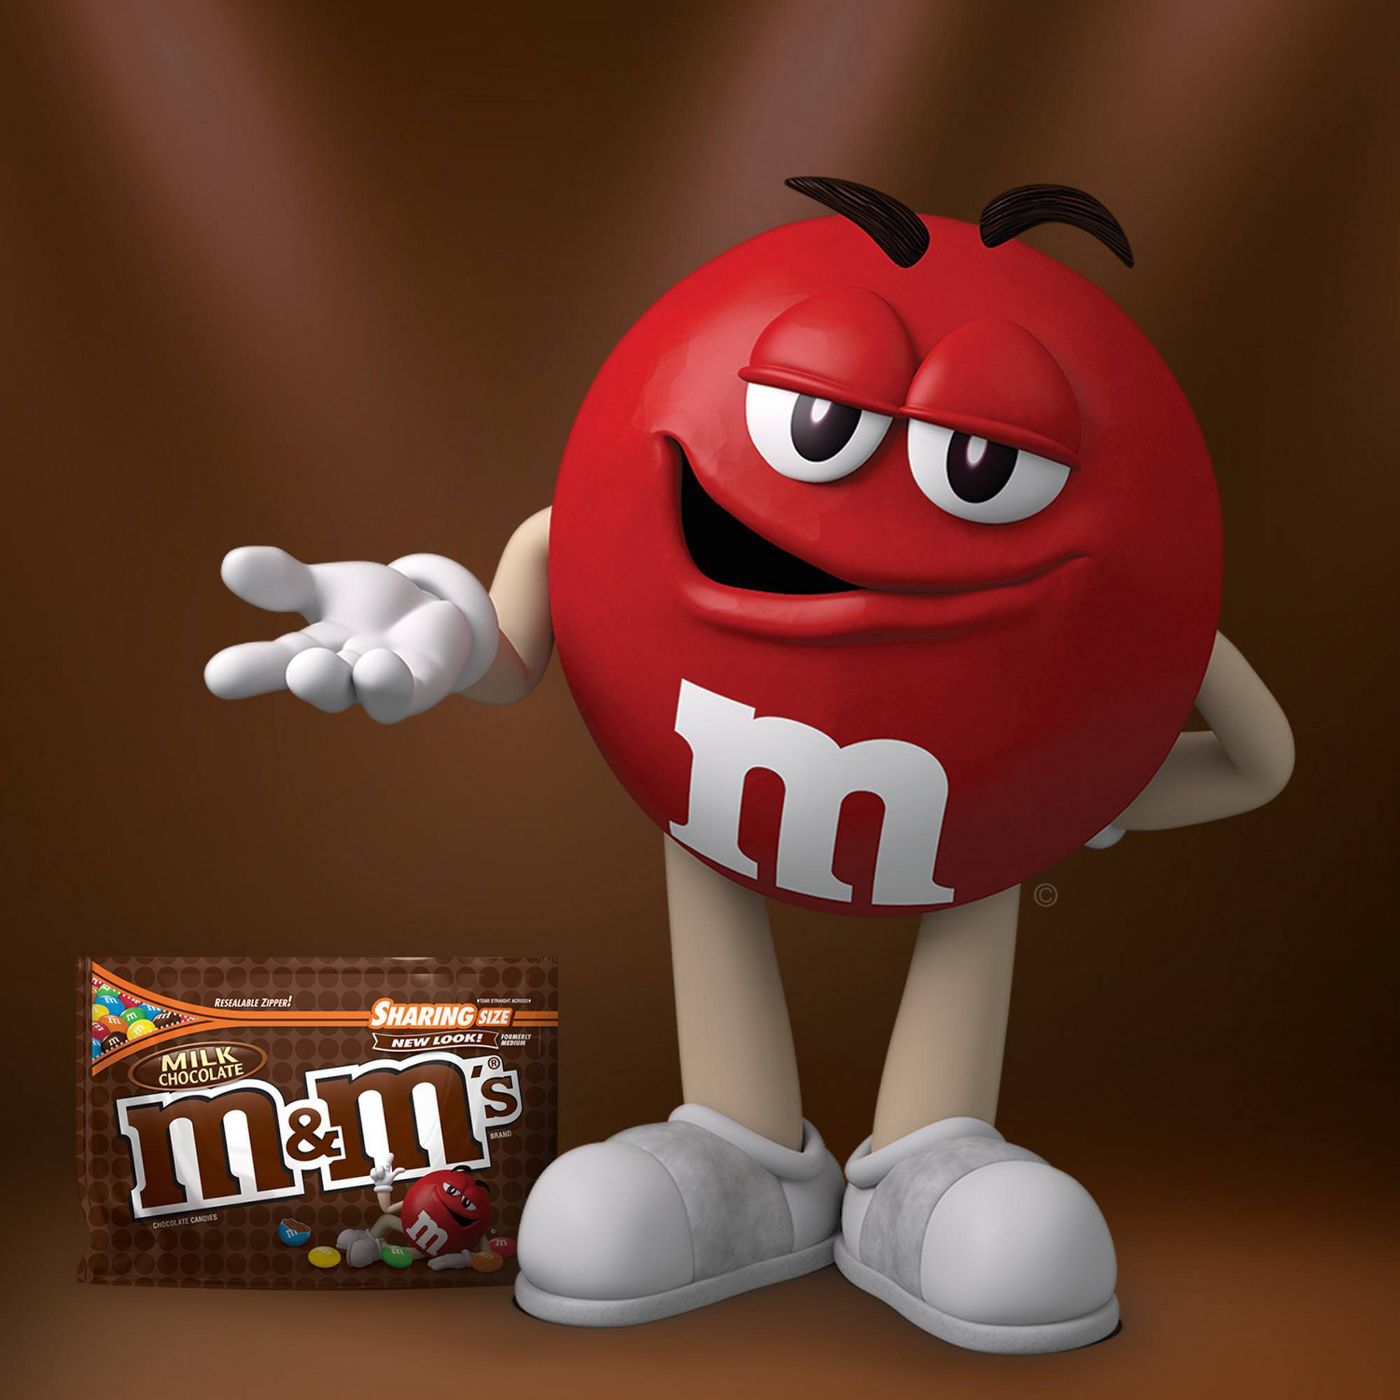 M&M'S Sharing Size Peanut Chocolate Candies 10.7 oz, Chocolate